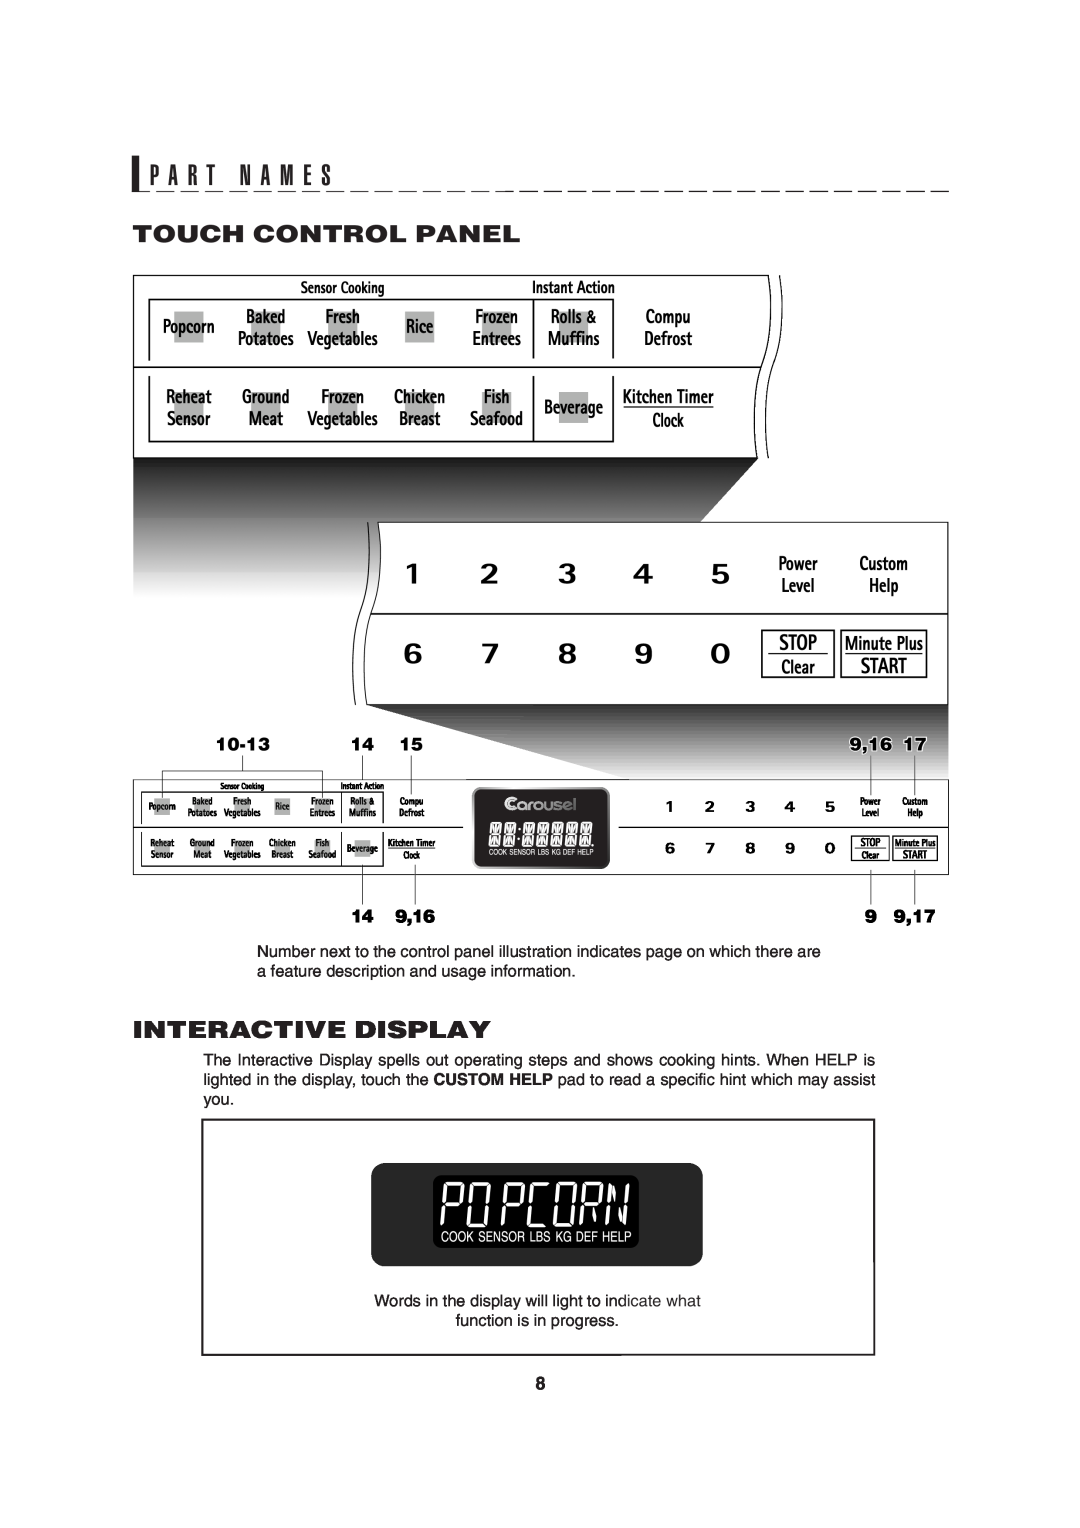 Sharp R-370E operation manual P A R T N A Me S, Touch Control Panel, Interactive Display, 10-13, 9,16, 9,17 